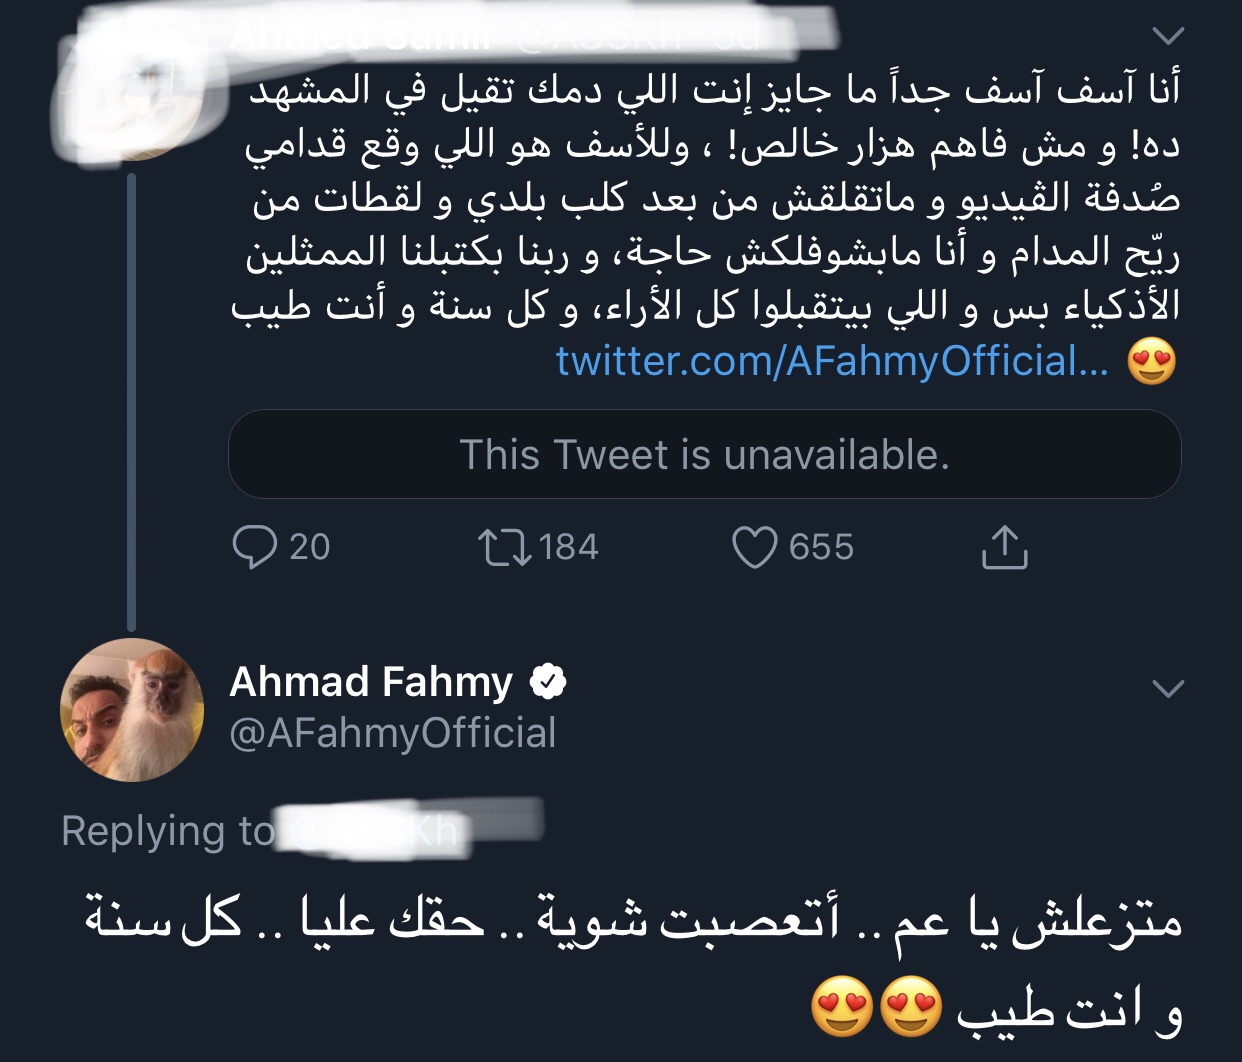 Ahmed Fahmy